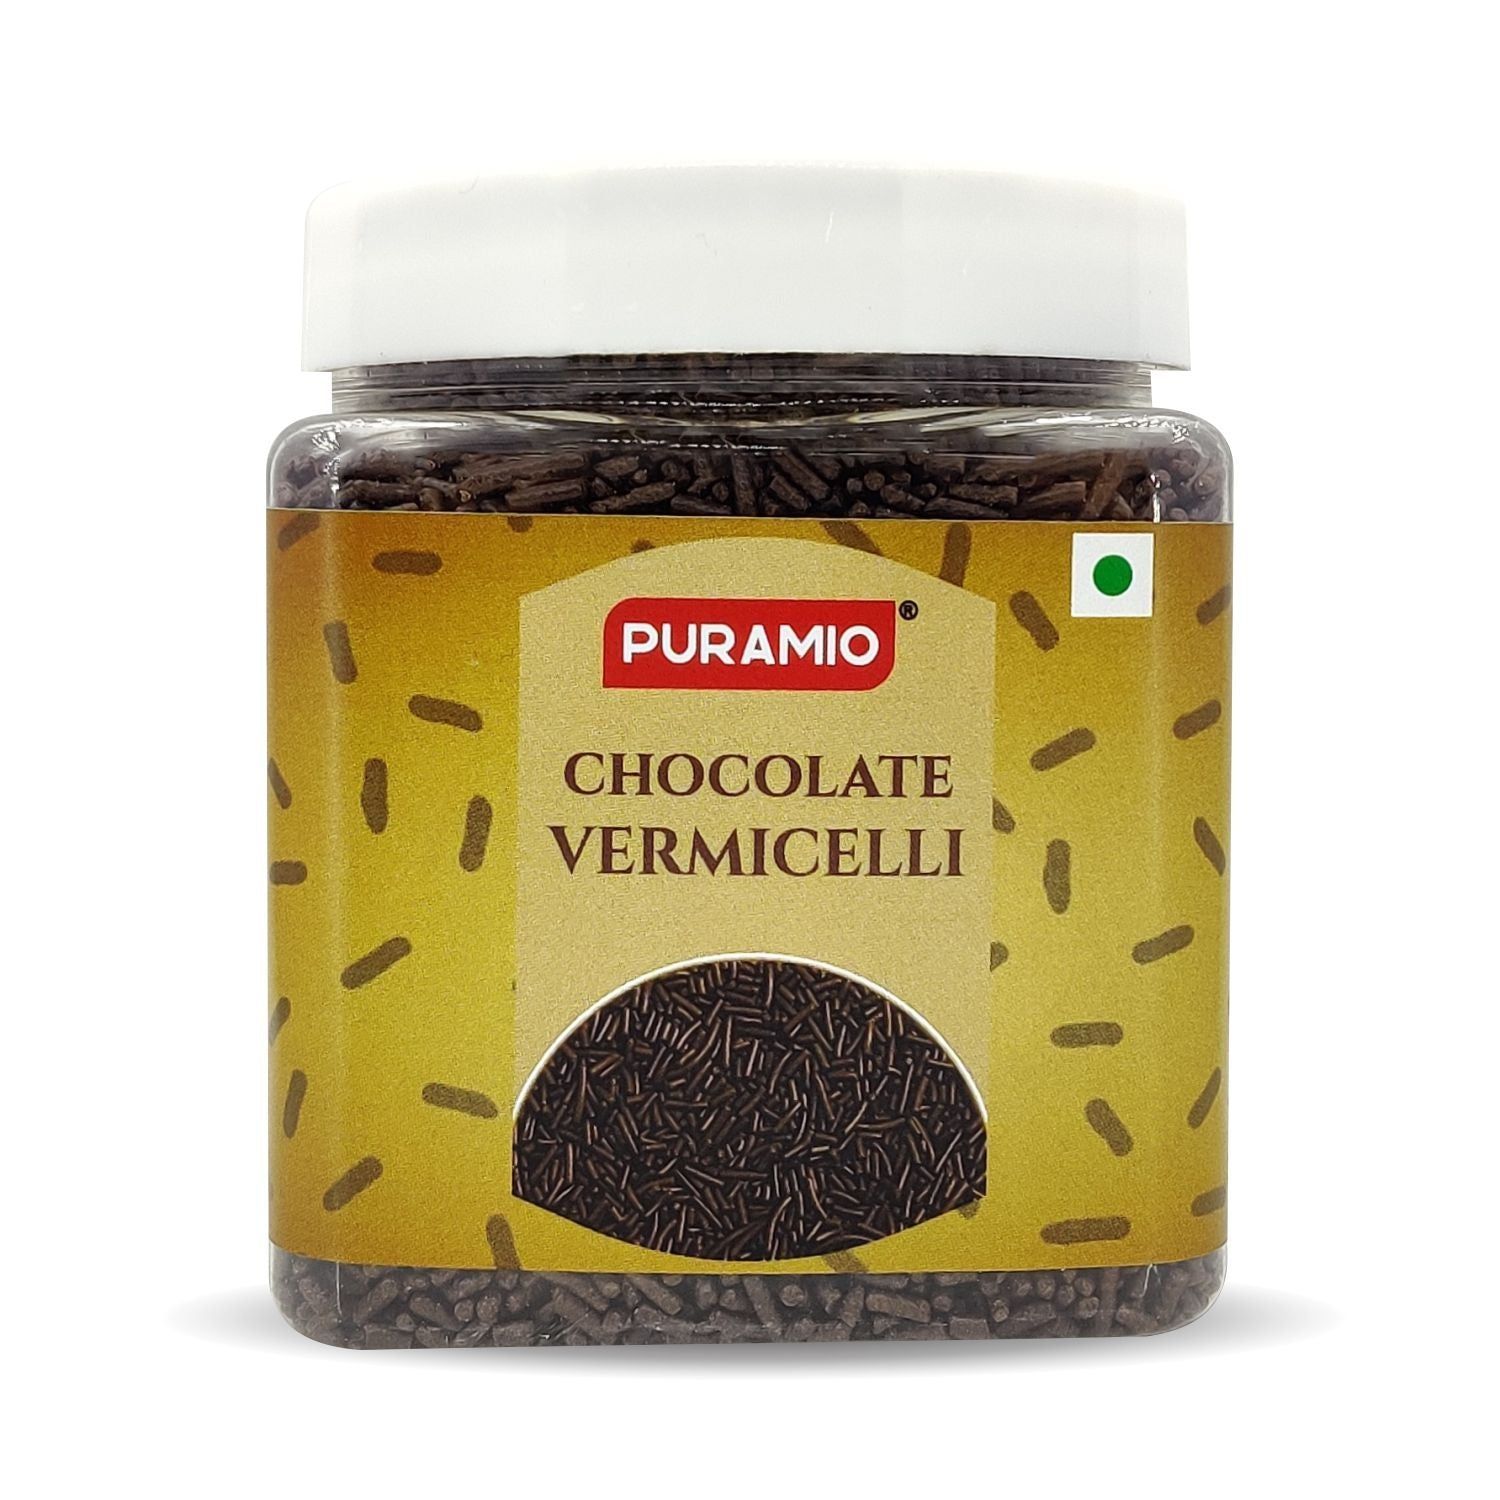 Puramio Chocolate Vermicelli, 125 gm